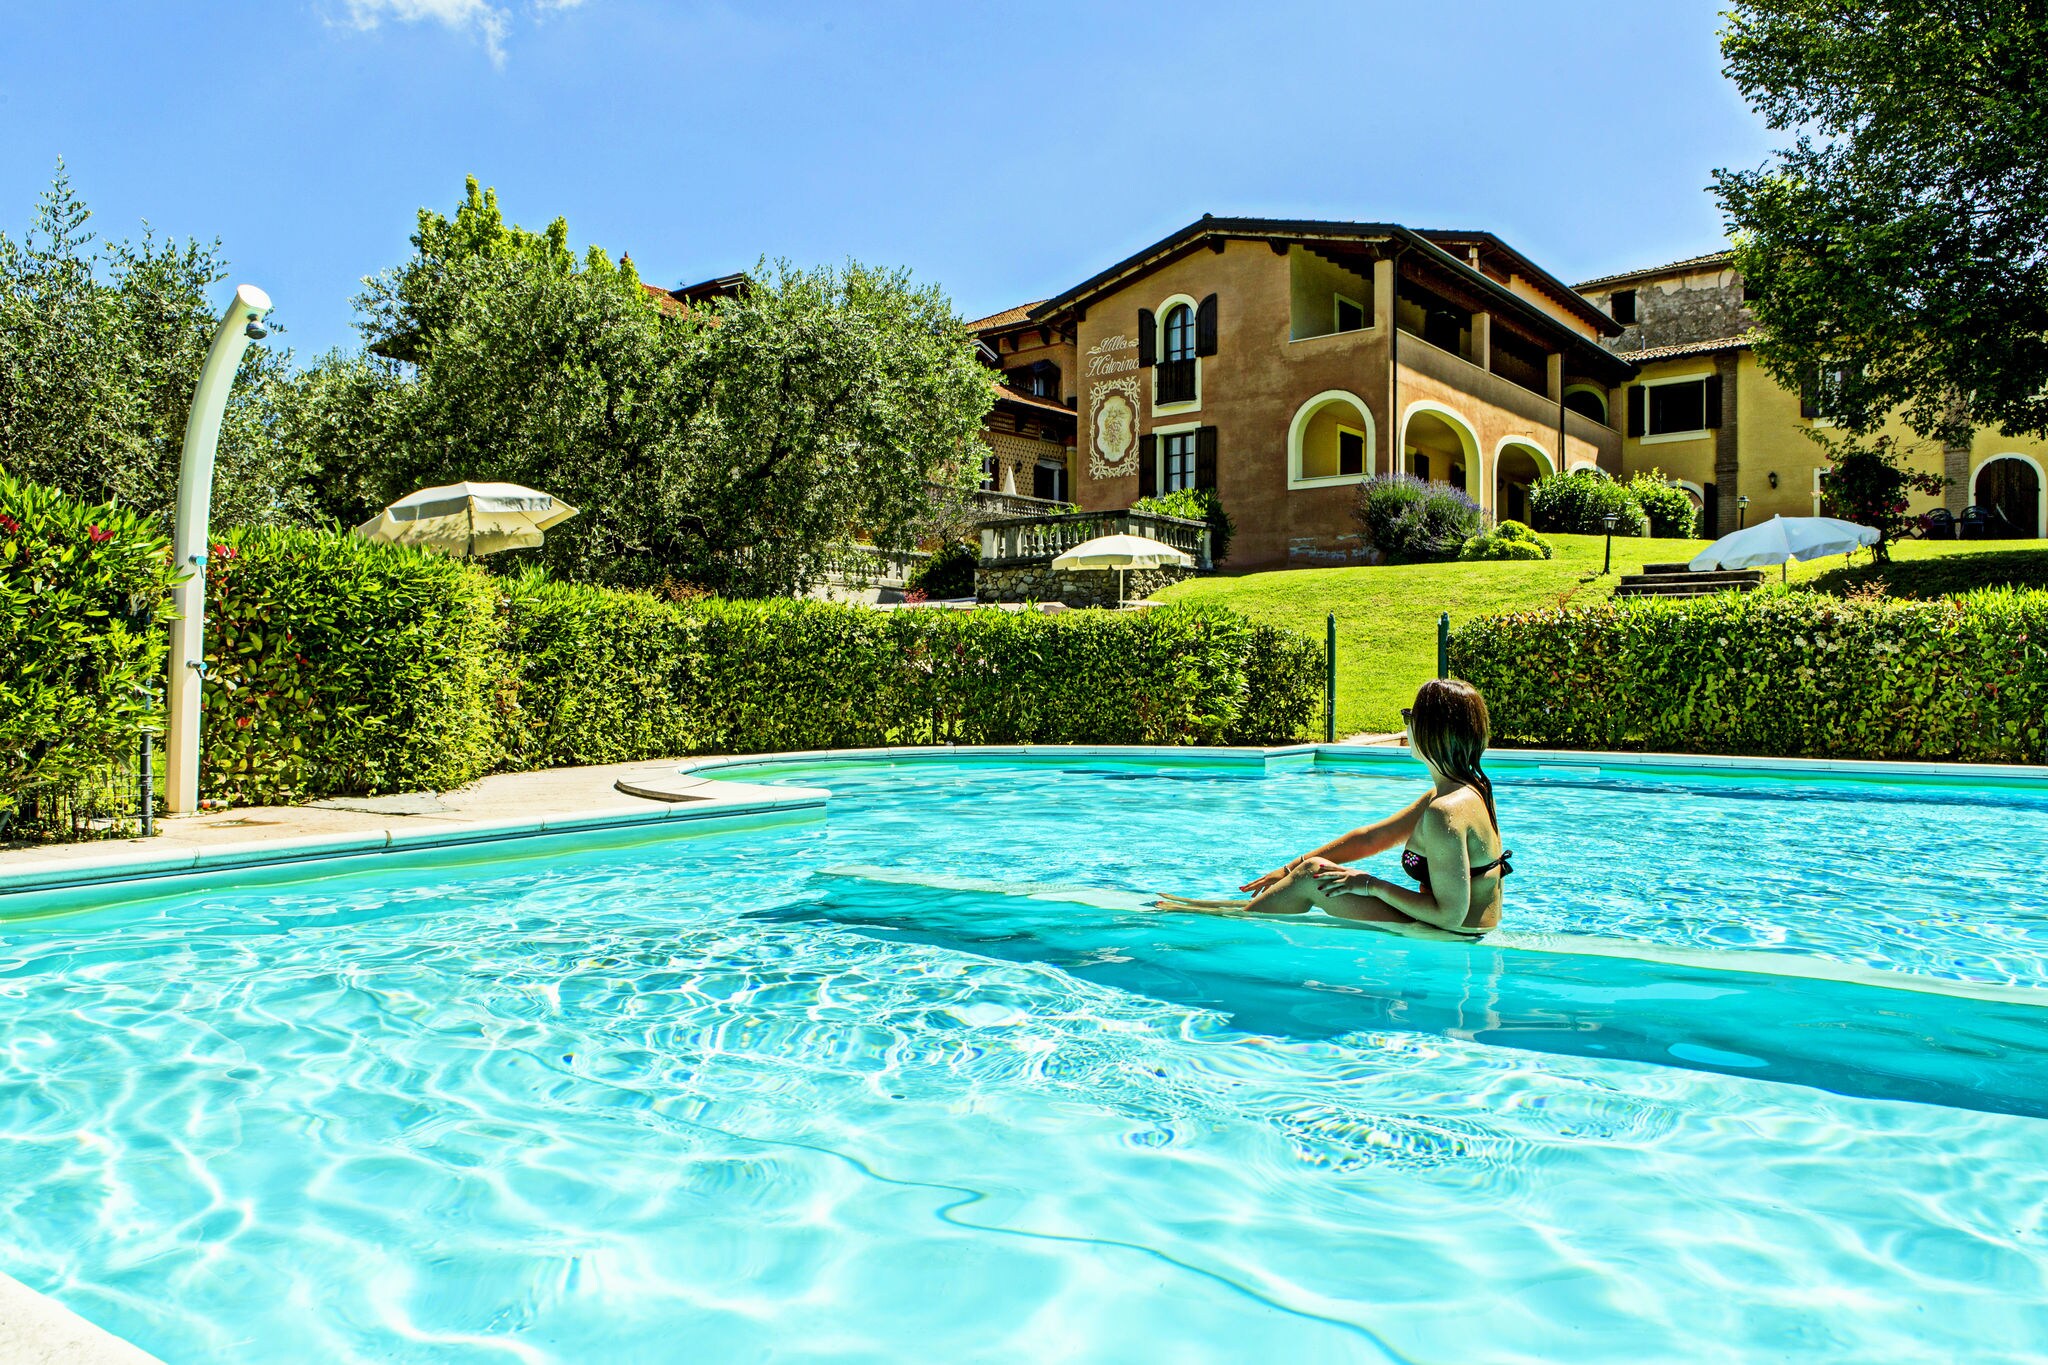 Maison de vacances confortable à Manerba del Garda, piscine